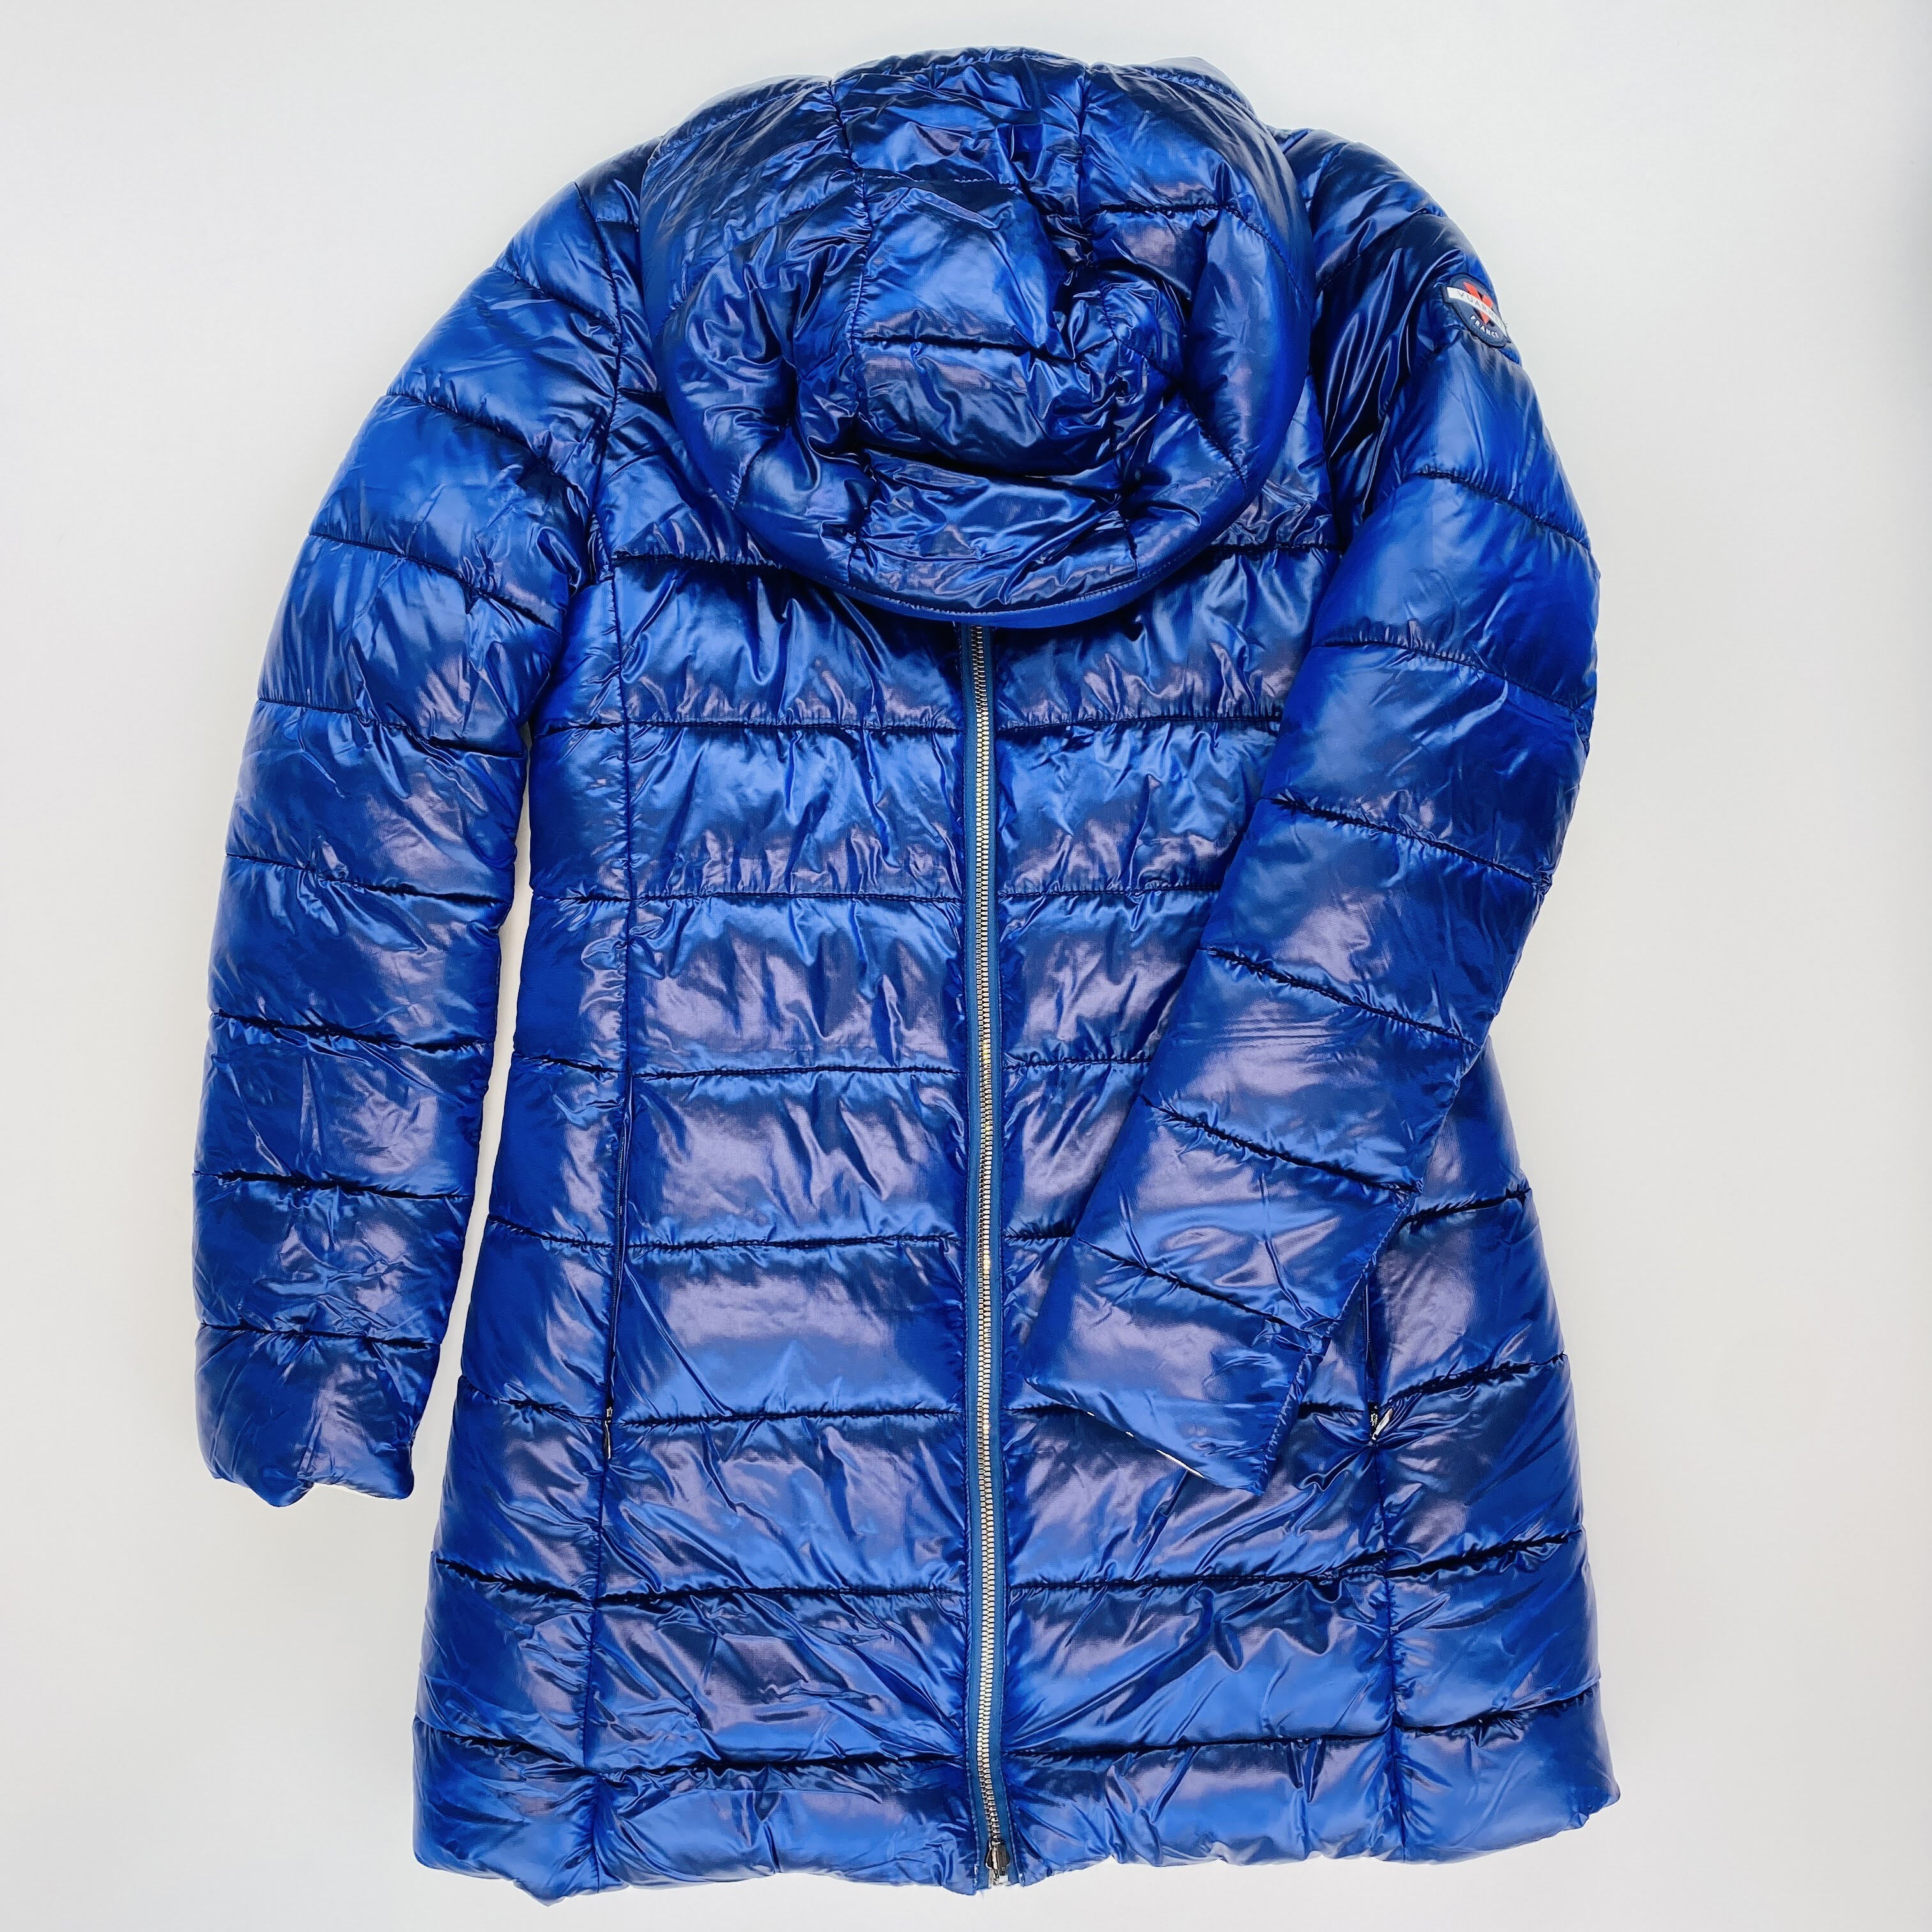 Vuarnet Ural Jacket Reversible - Second Hand Synthetic jacket - Women's - Multicolored - S | Hardloop